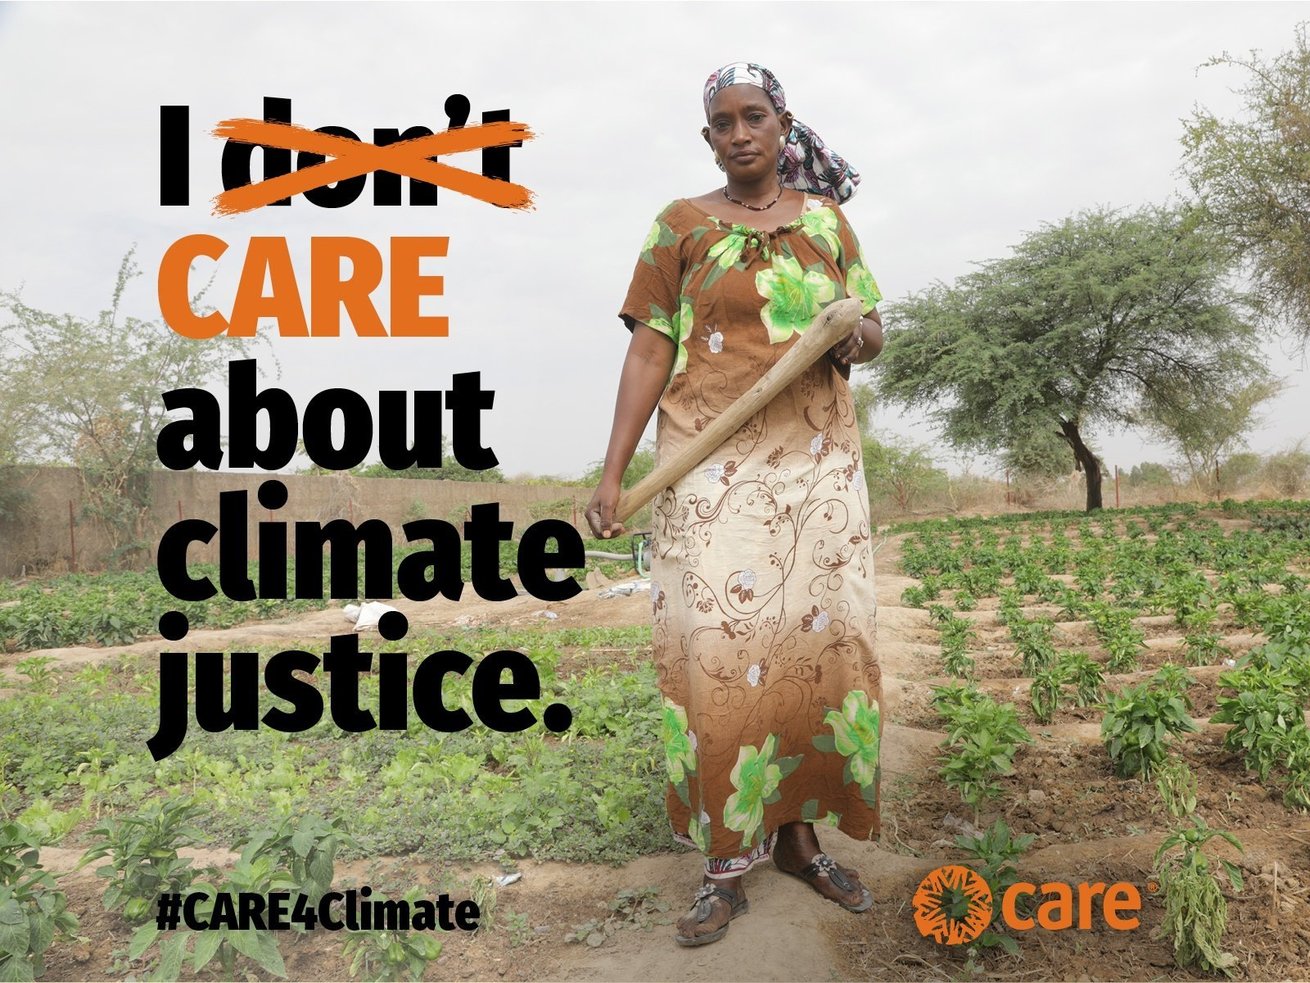 CARE Climate Justice